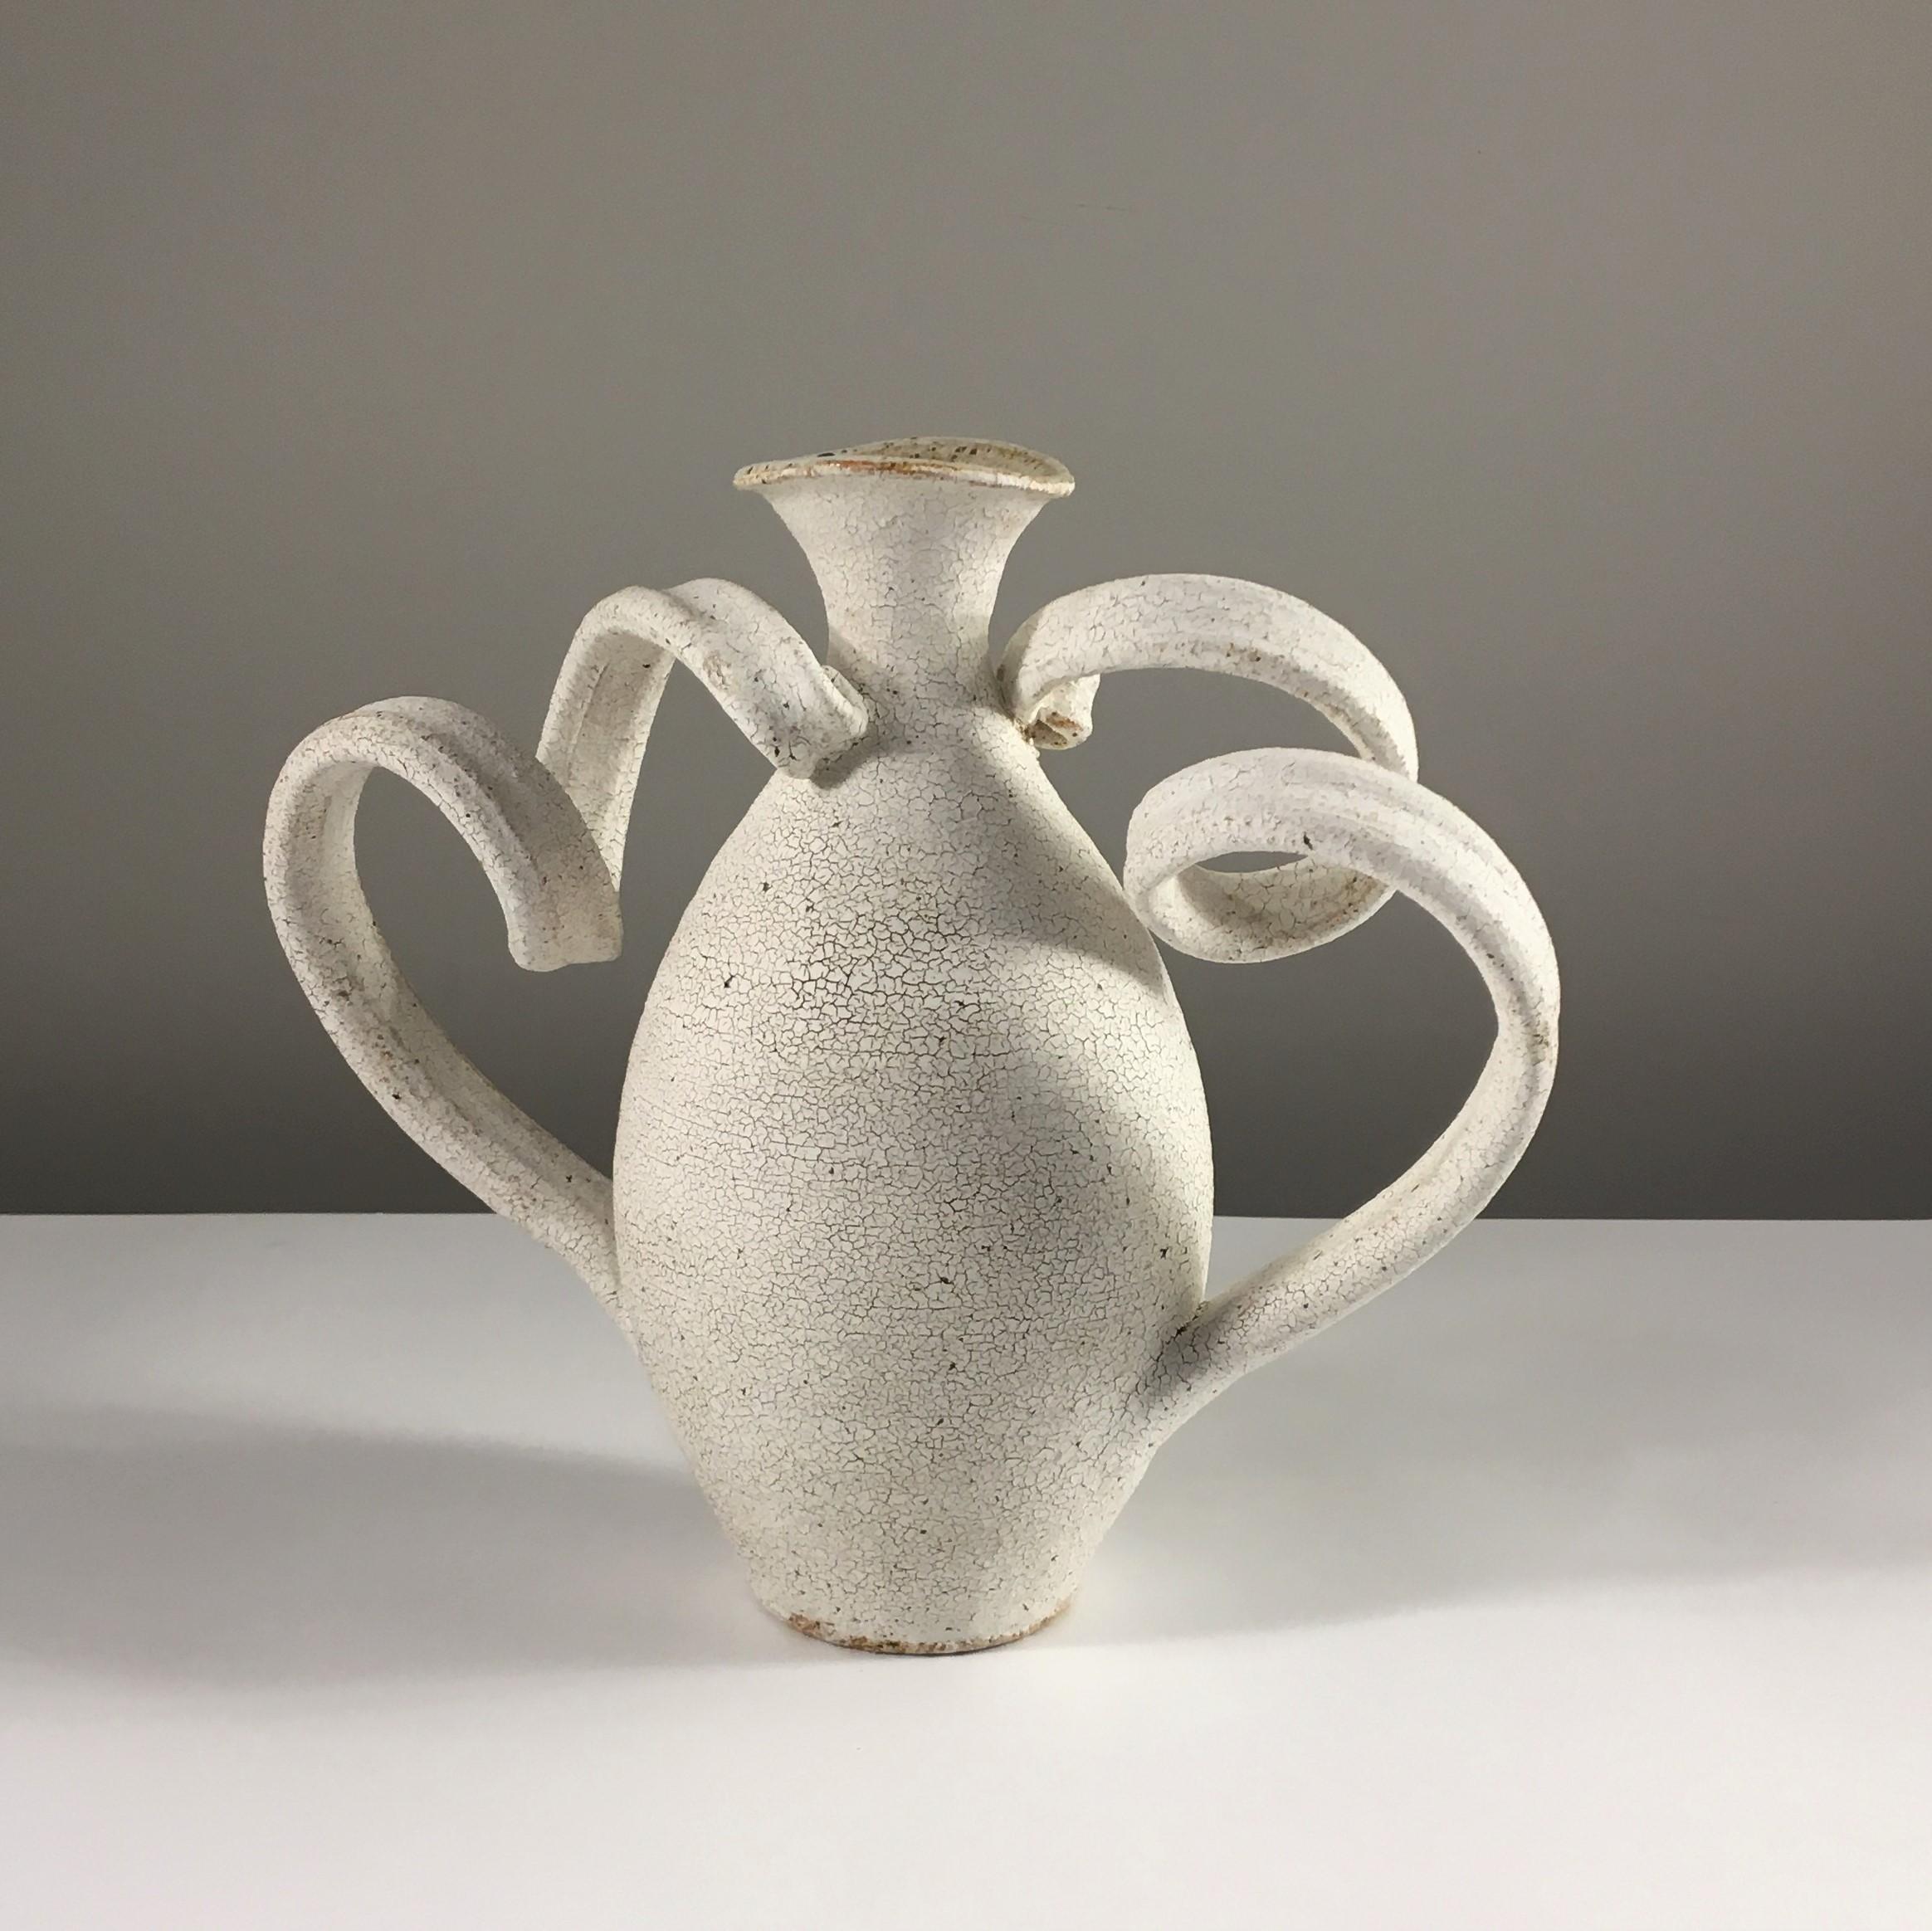 Ceramic Amphora vase by Yumiko Kuga. Dimensions: W 11